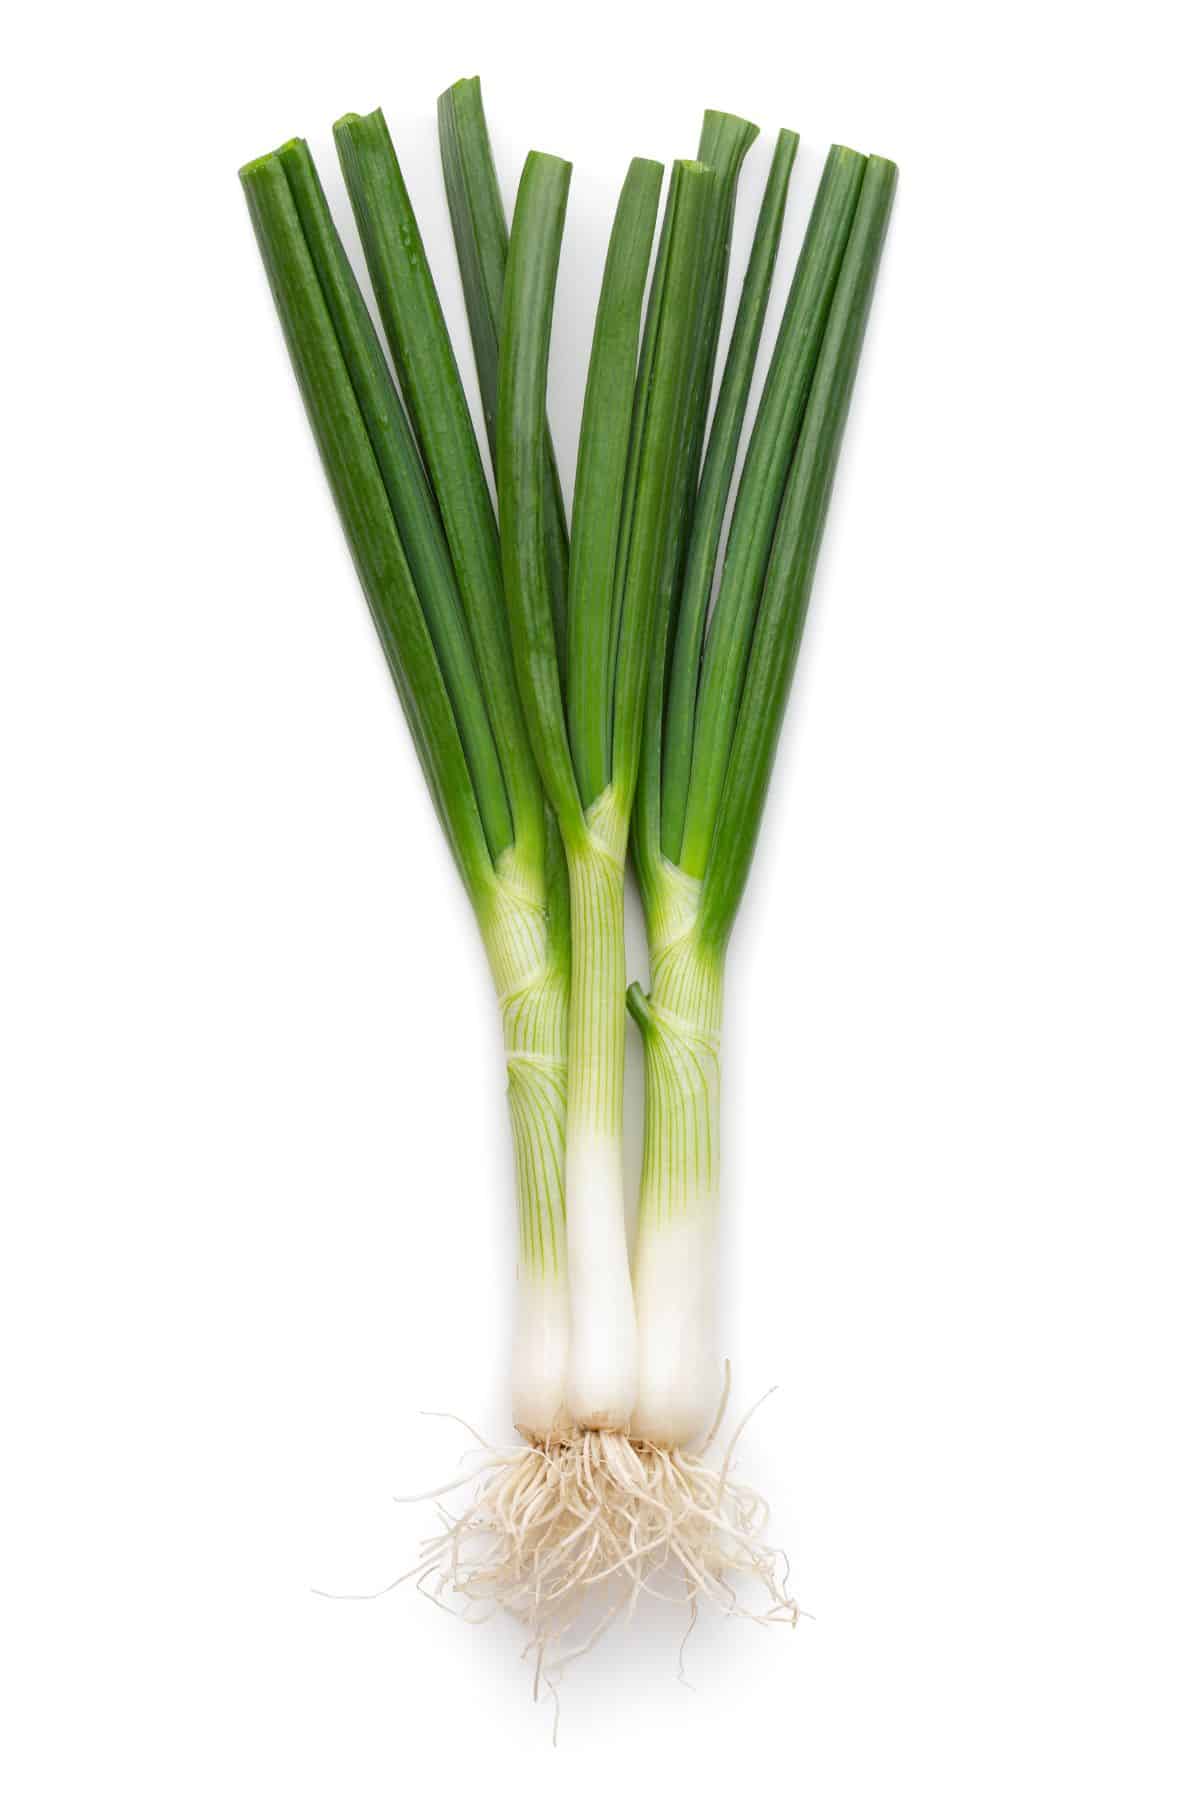 Green onion bundle on white background.